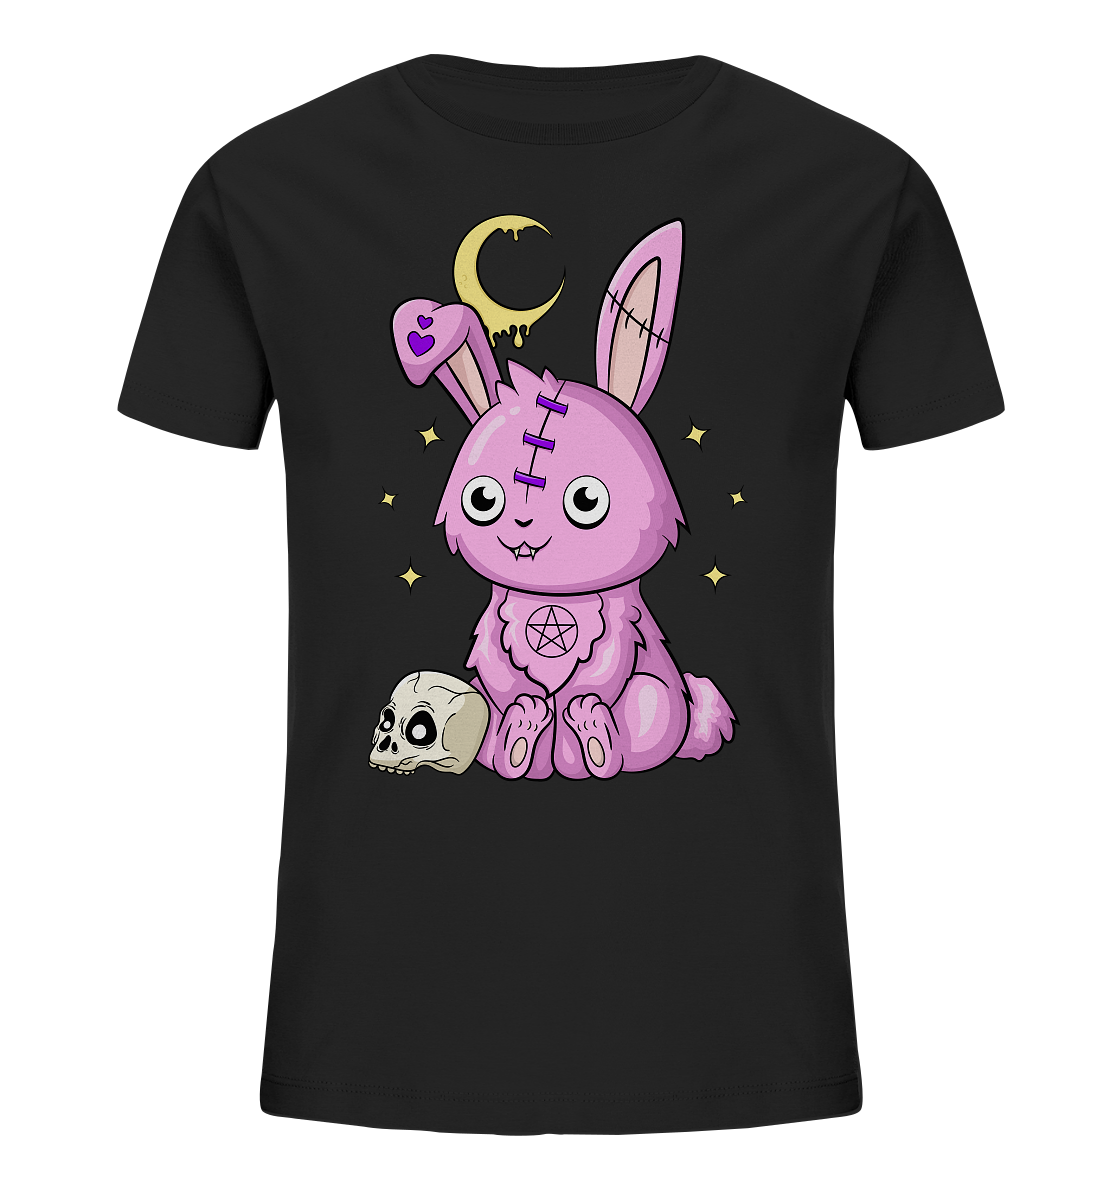 Kawaii Bunny - Kids Organic Shirt